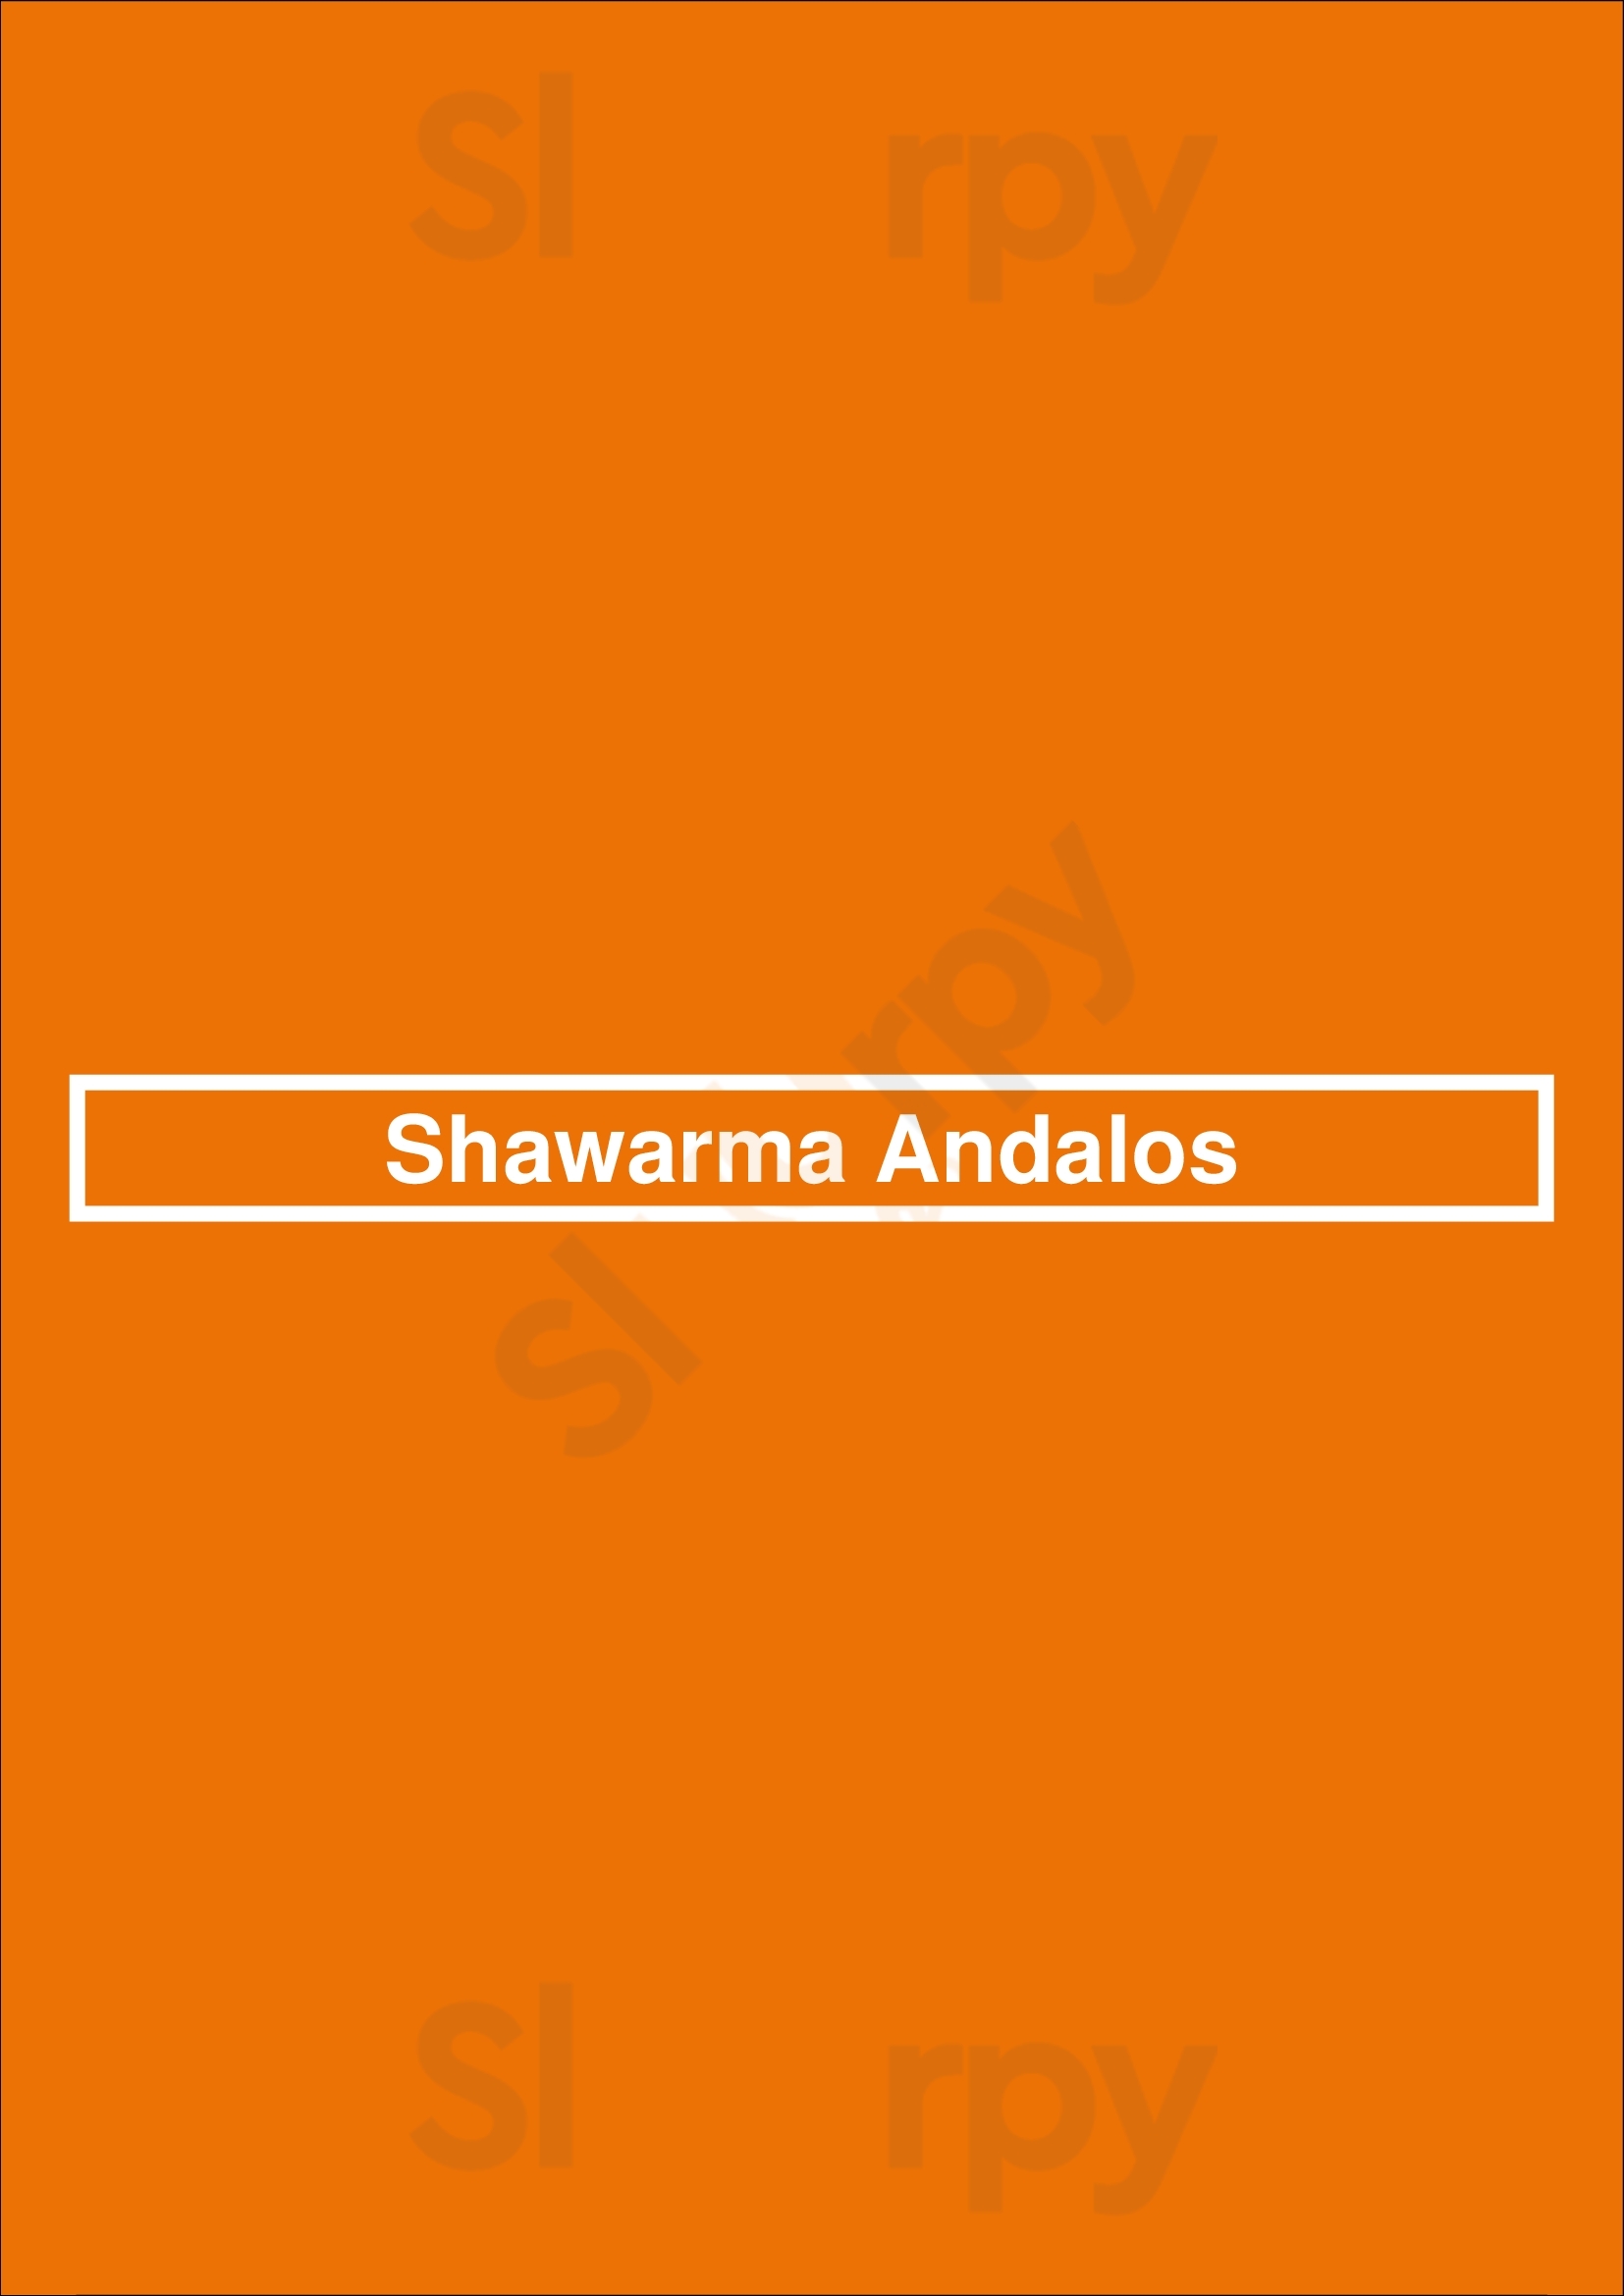 Shawarma Andalos Ottawa Menu - 1